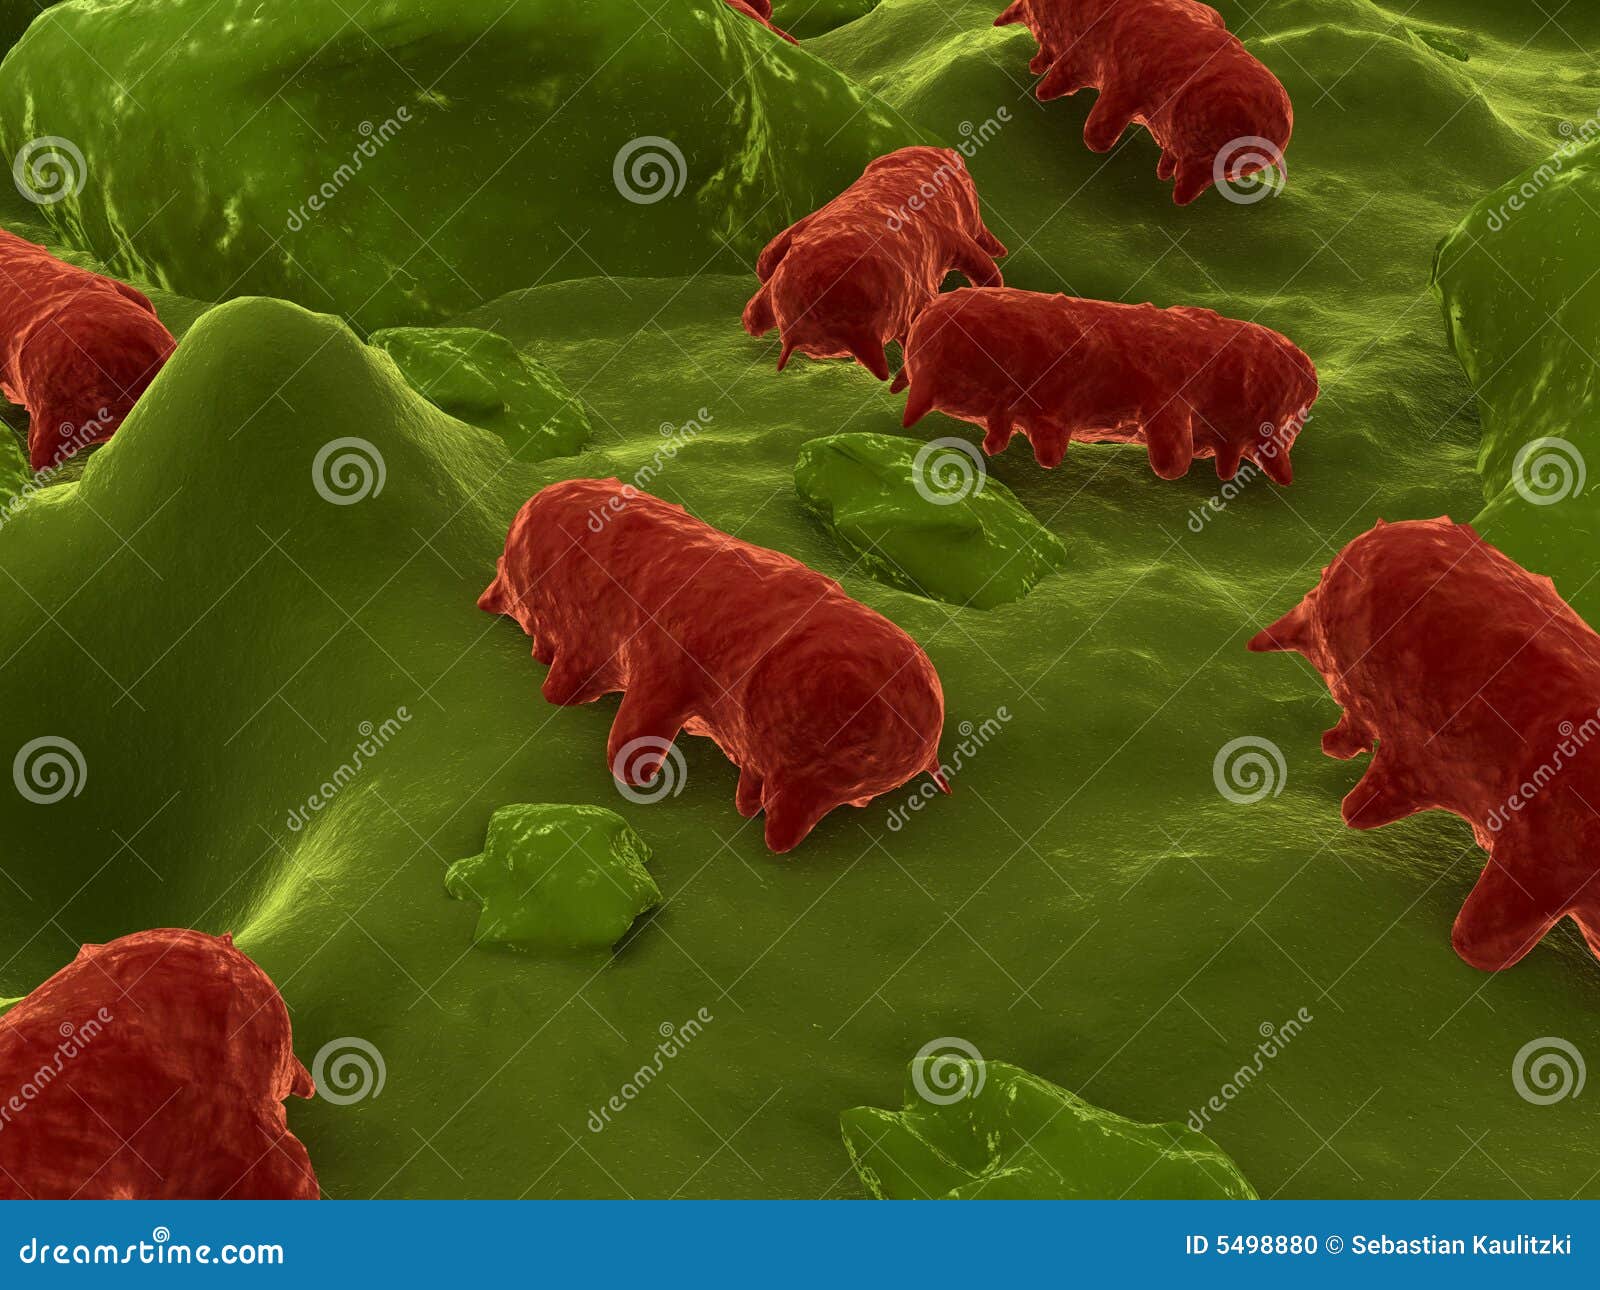 download campylobacteriosis deadly diseases and epidemics